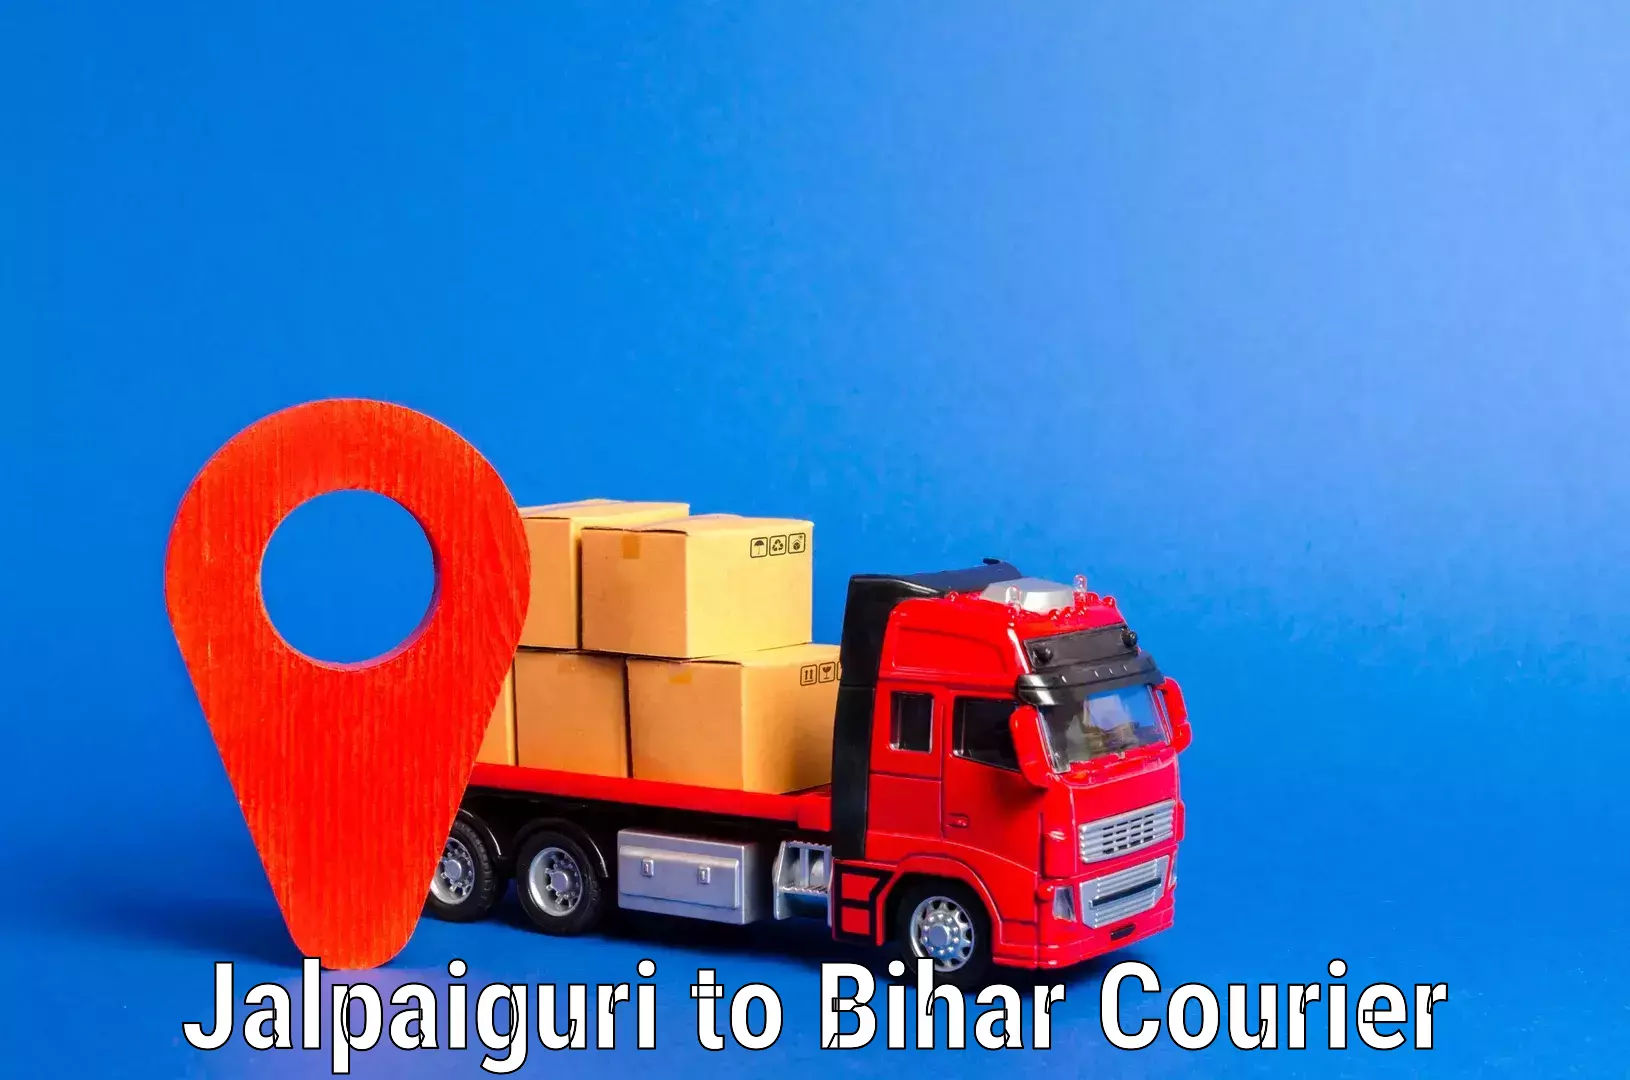 Furniture relocation experts Jalpaiguri to Bihar